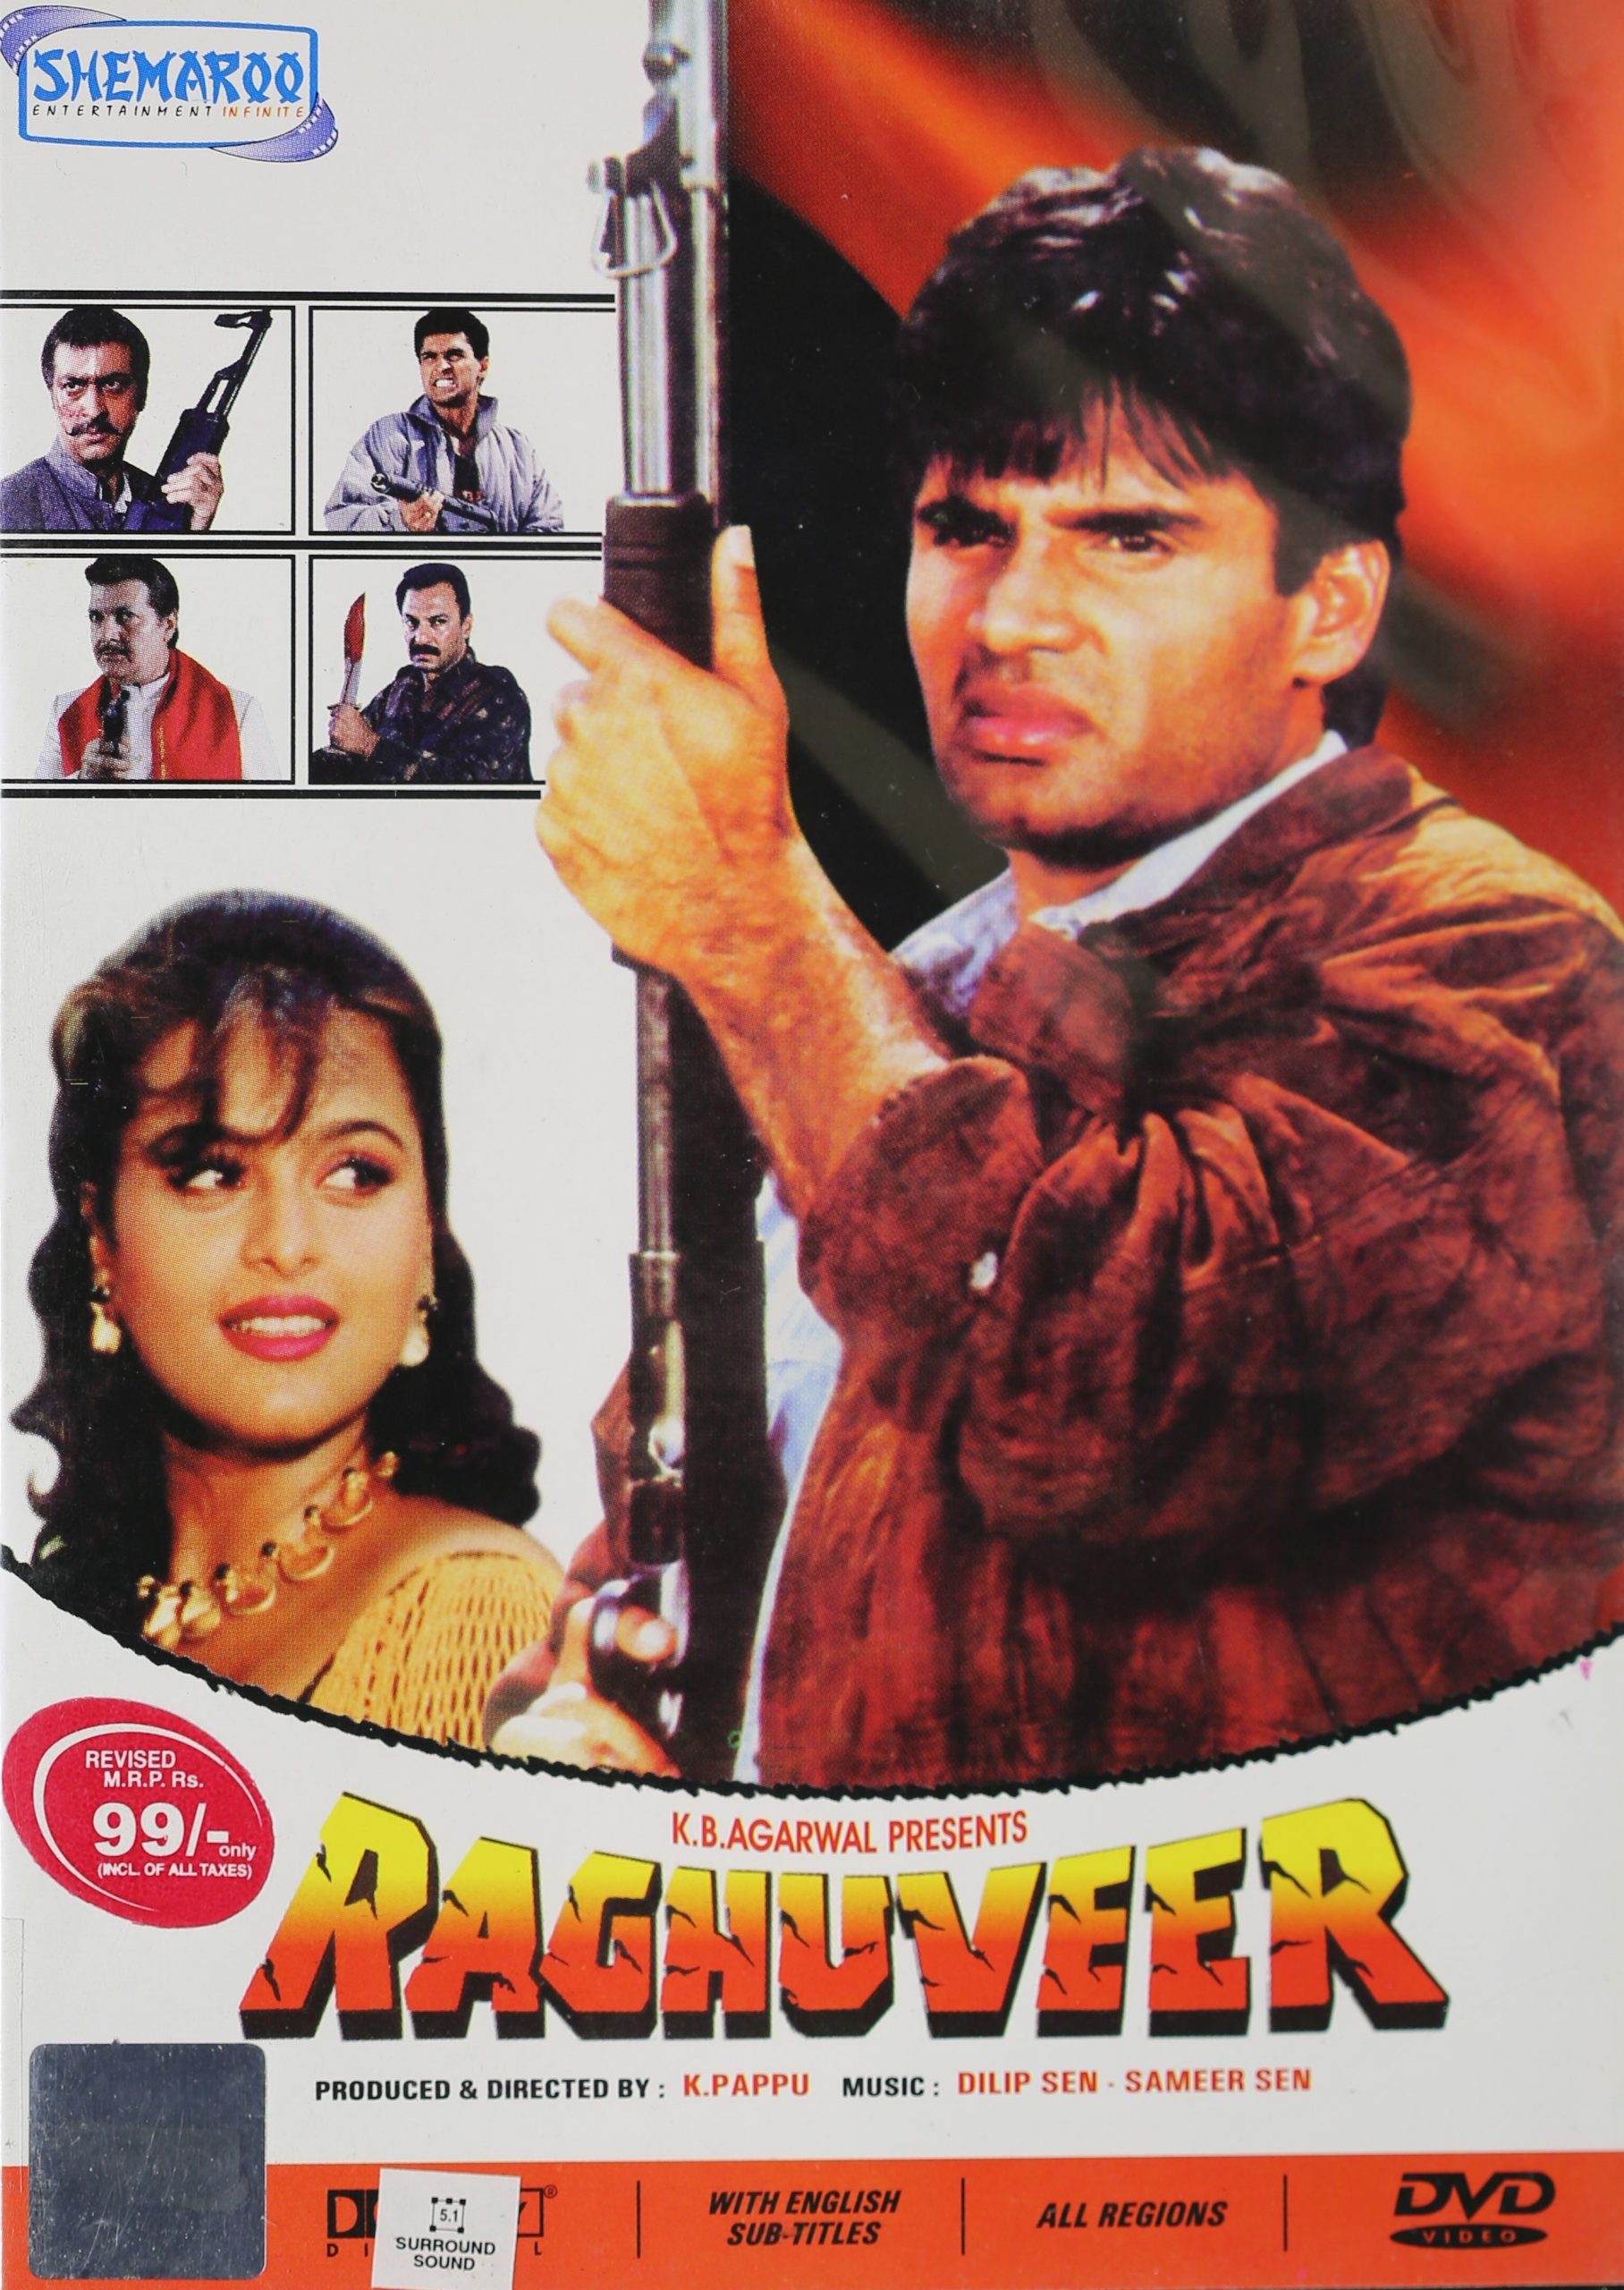 Raghuveer 1995 5825 Poster.jpg